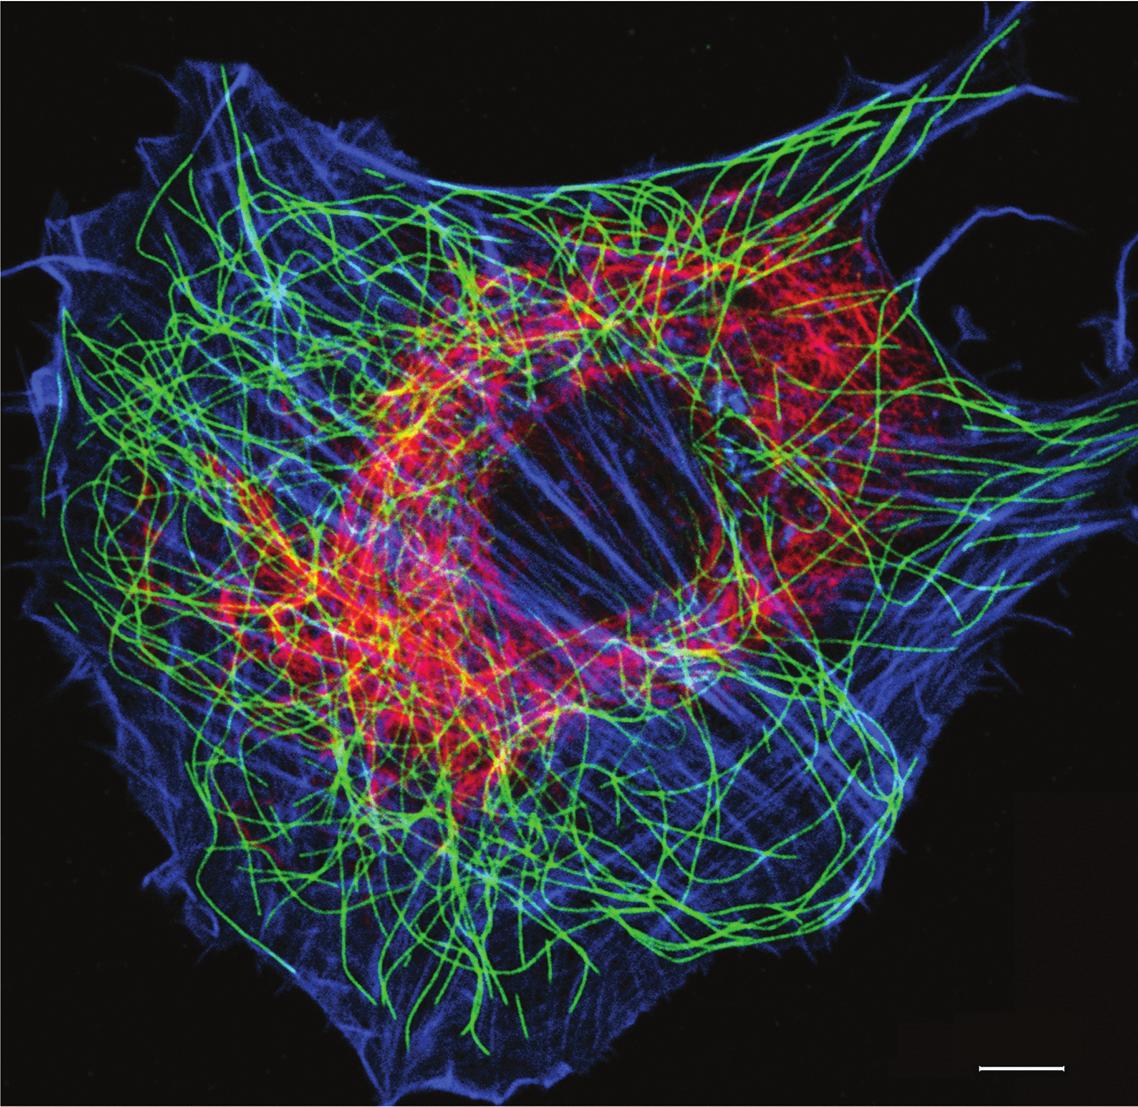 cytoskeleton of a fibroblast cell